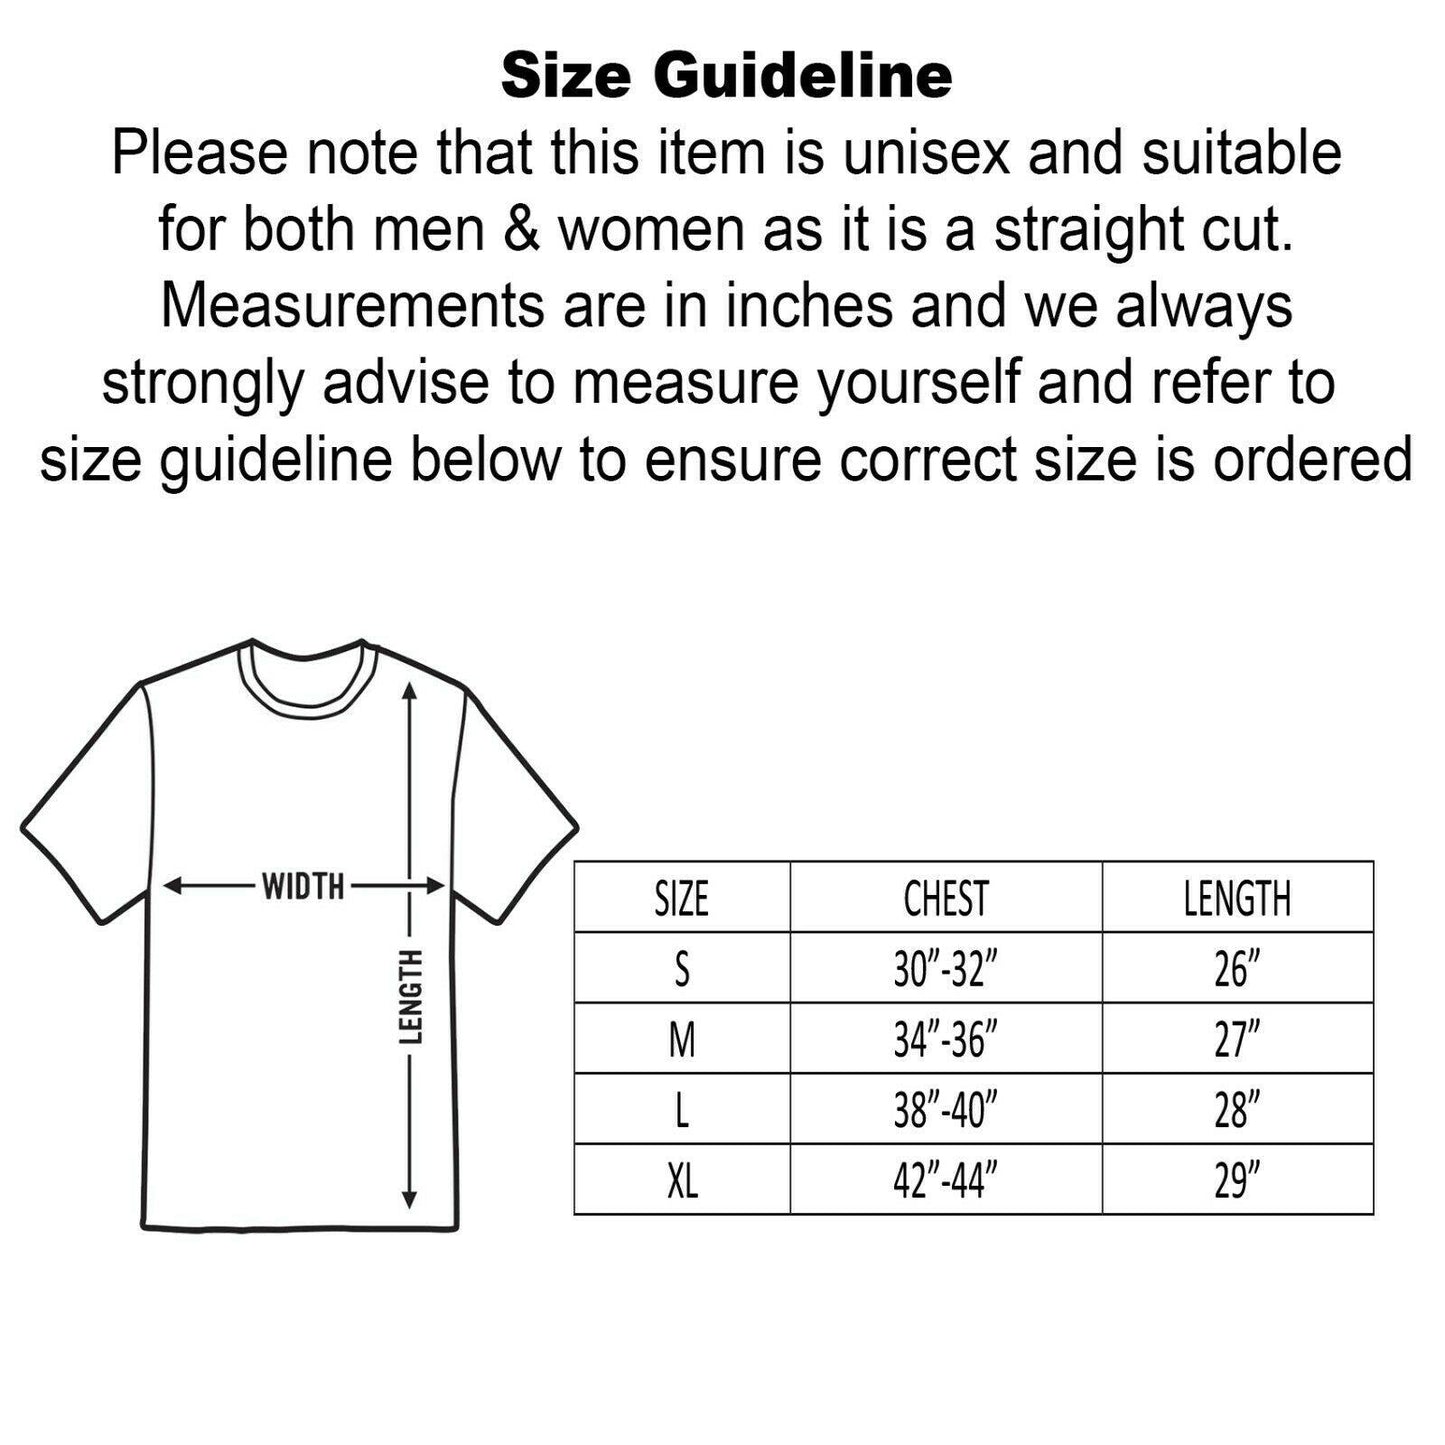 Run DMC Short Sleeve T-Shirt - 101Box